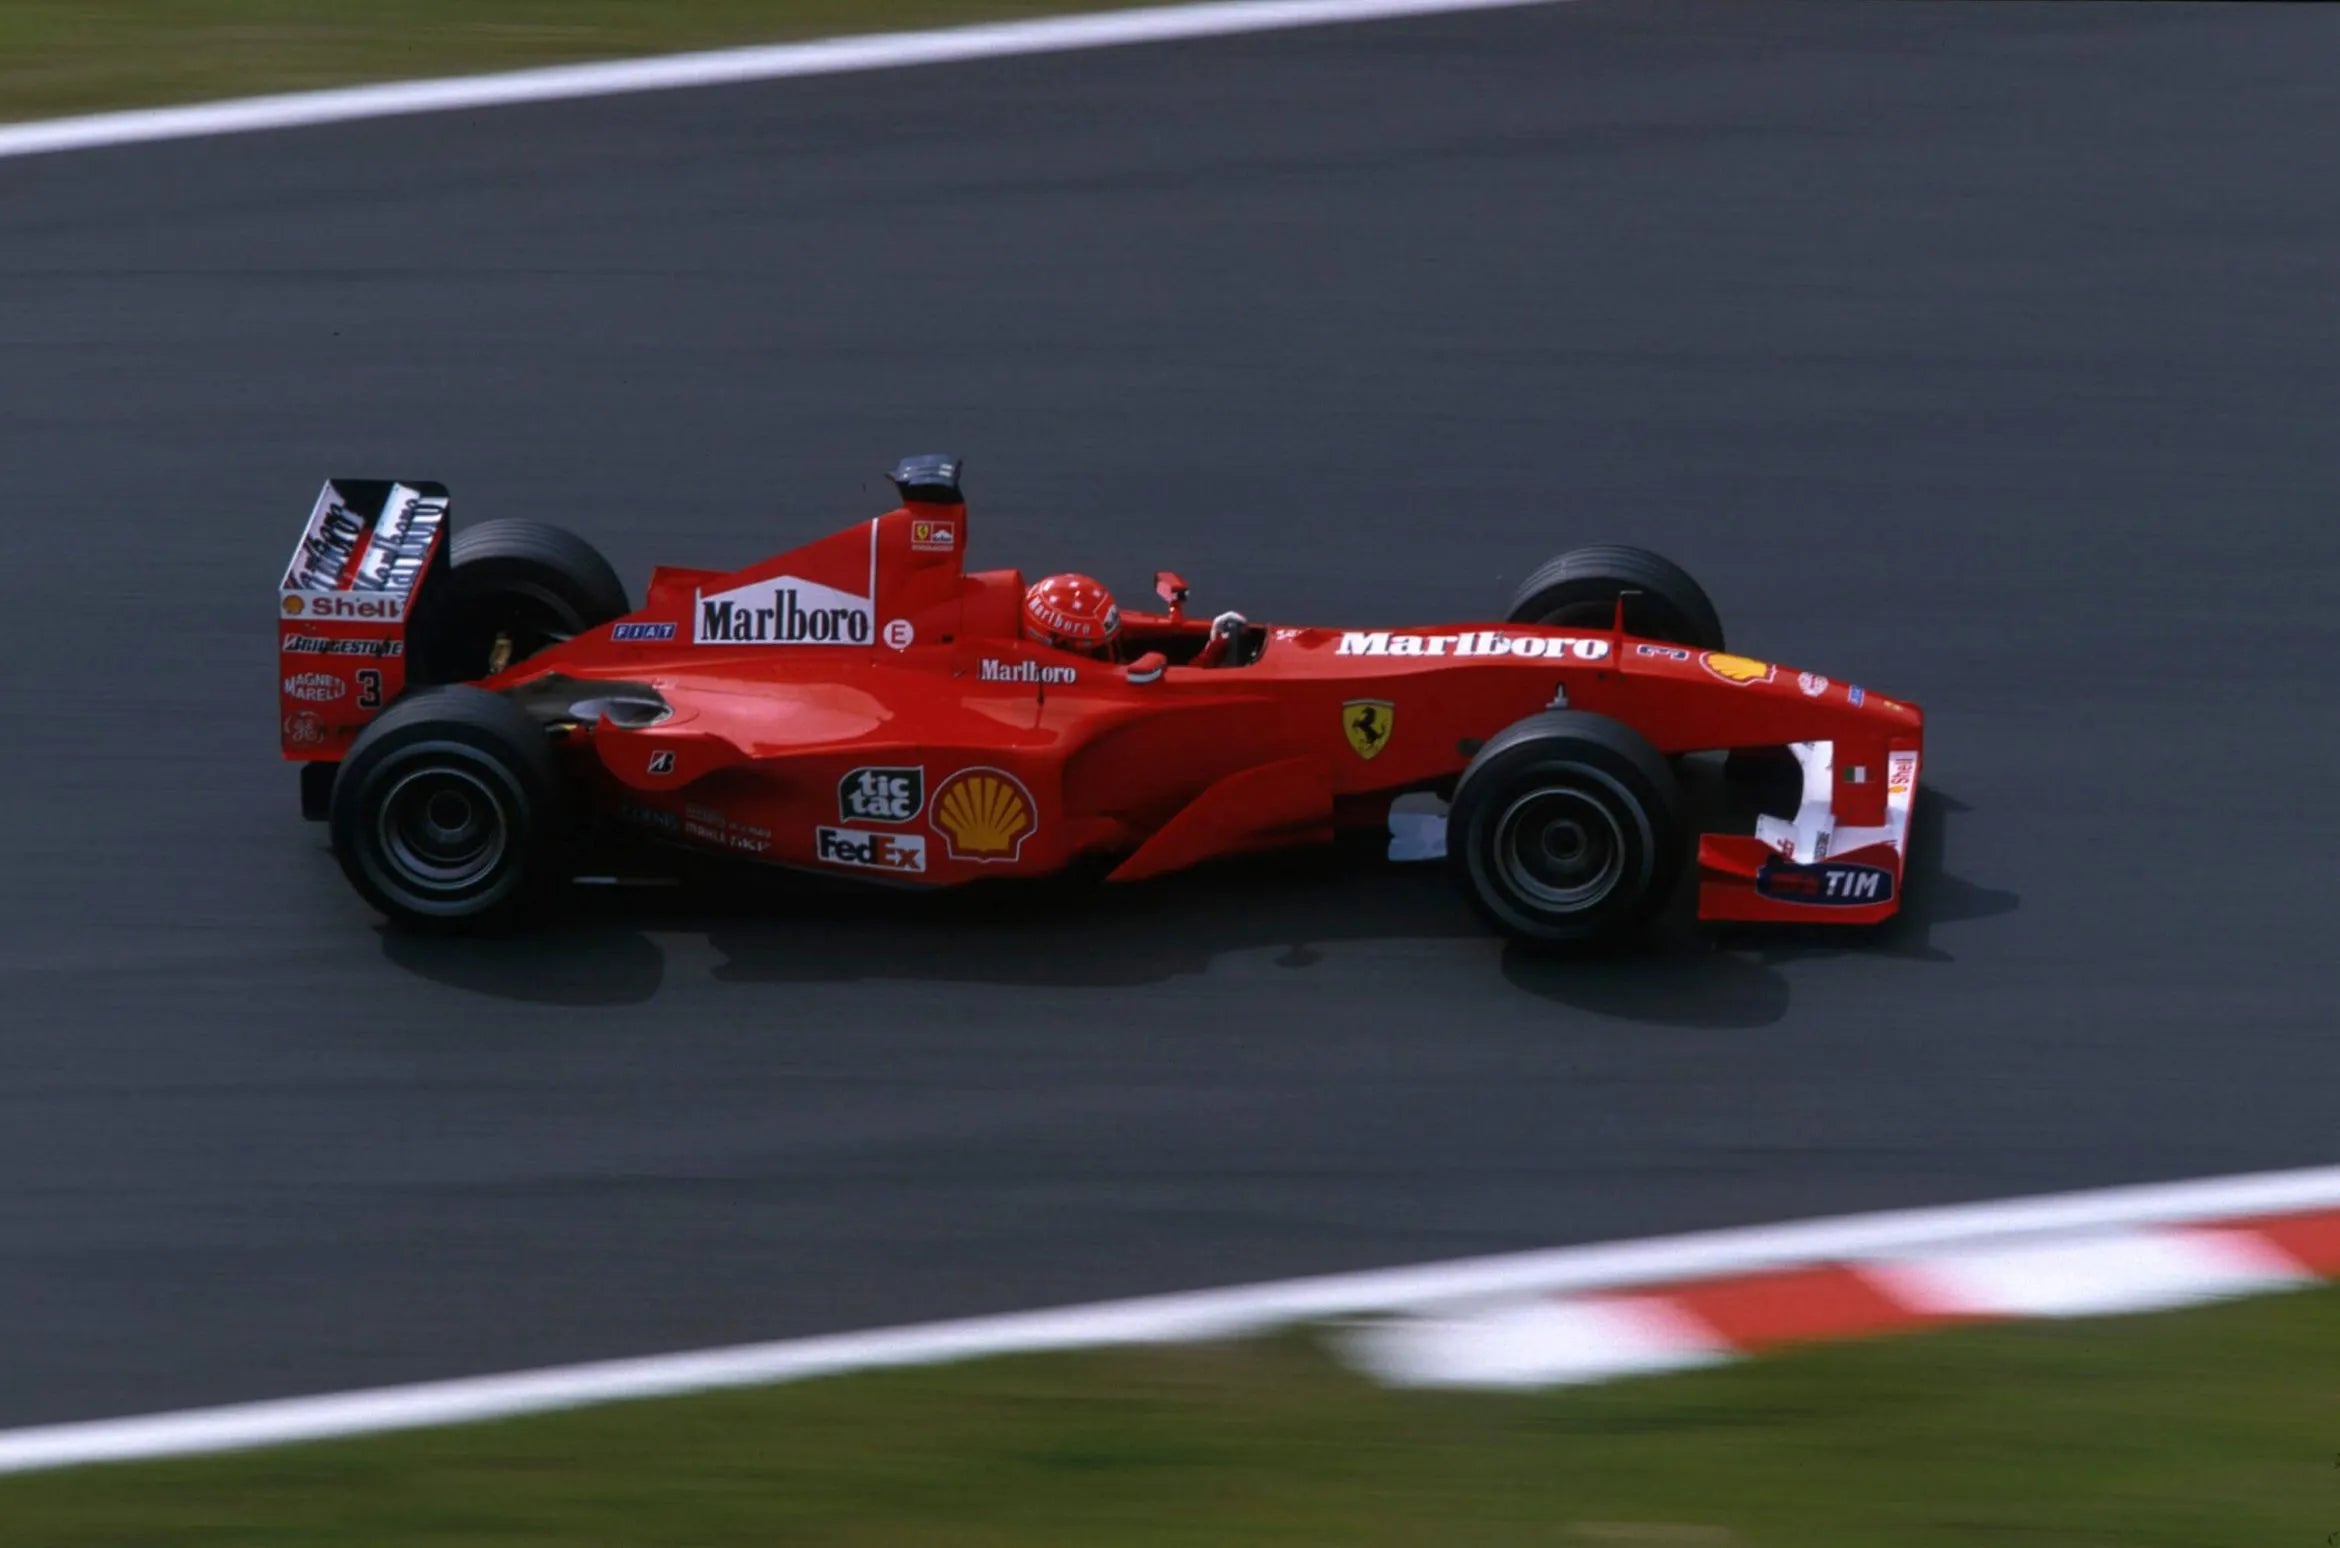 Schumacher's Success at Suzuka: Crossing the Line, Raising the Bar